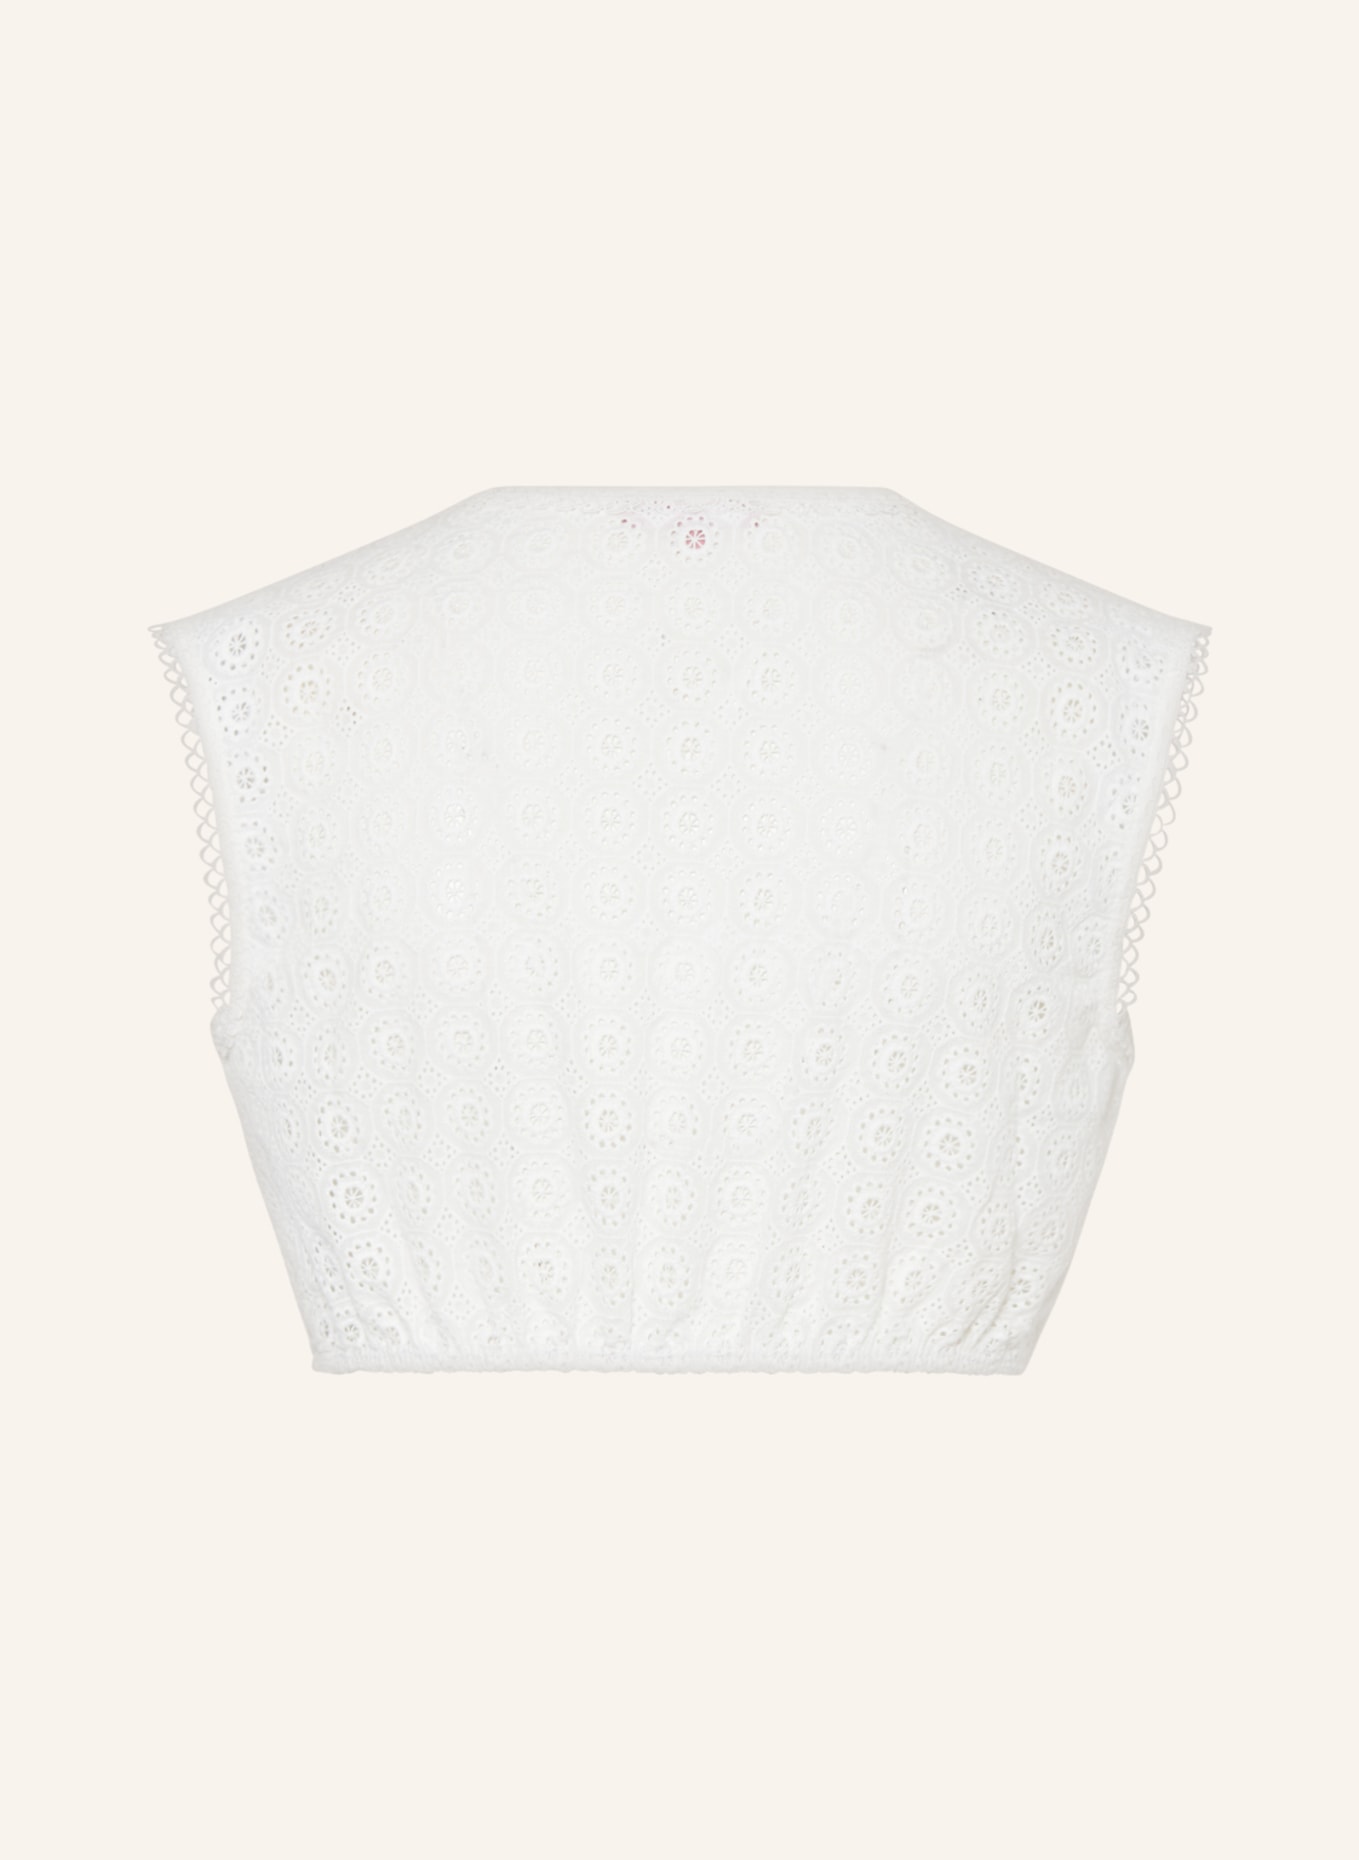 KRÜGER Dirndl blouse in white